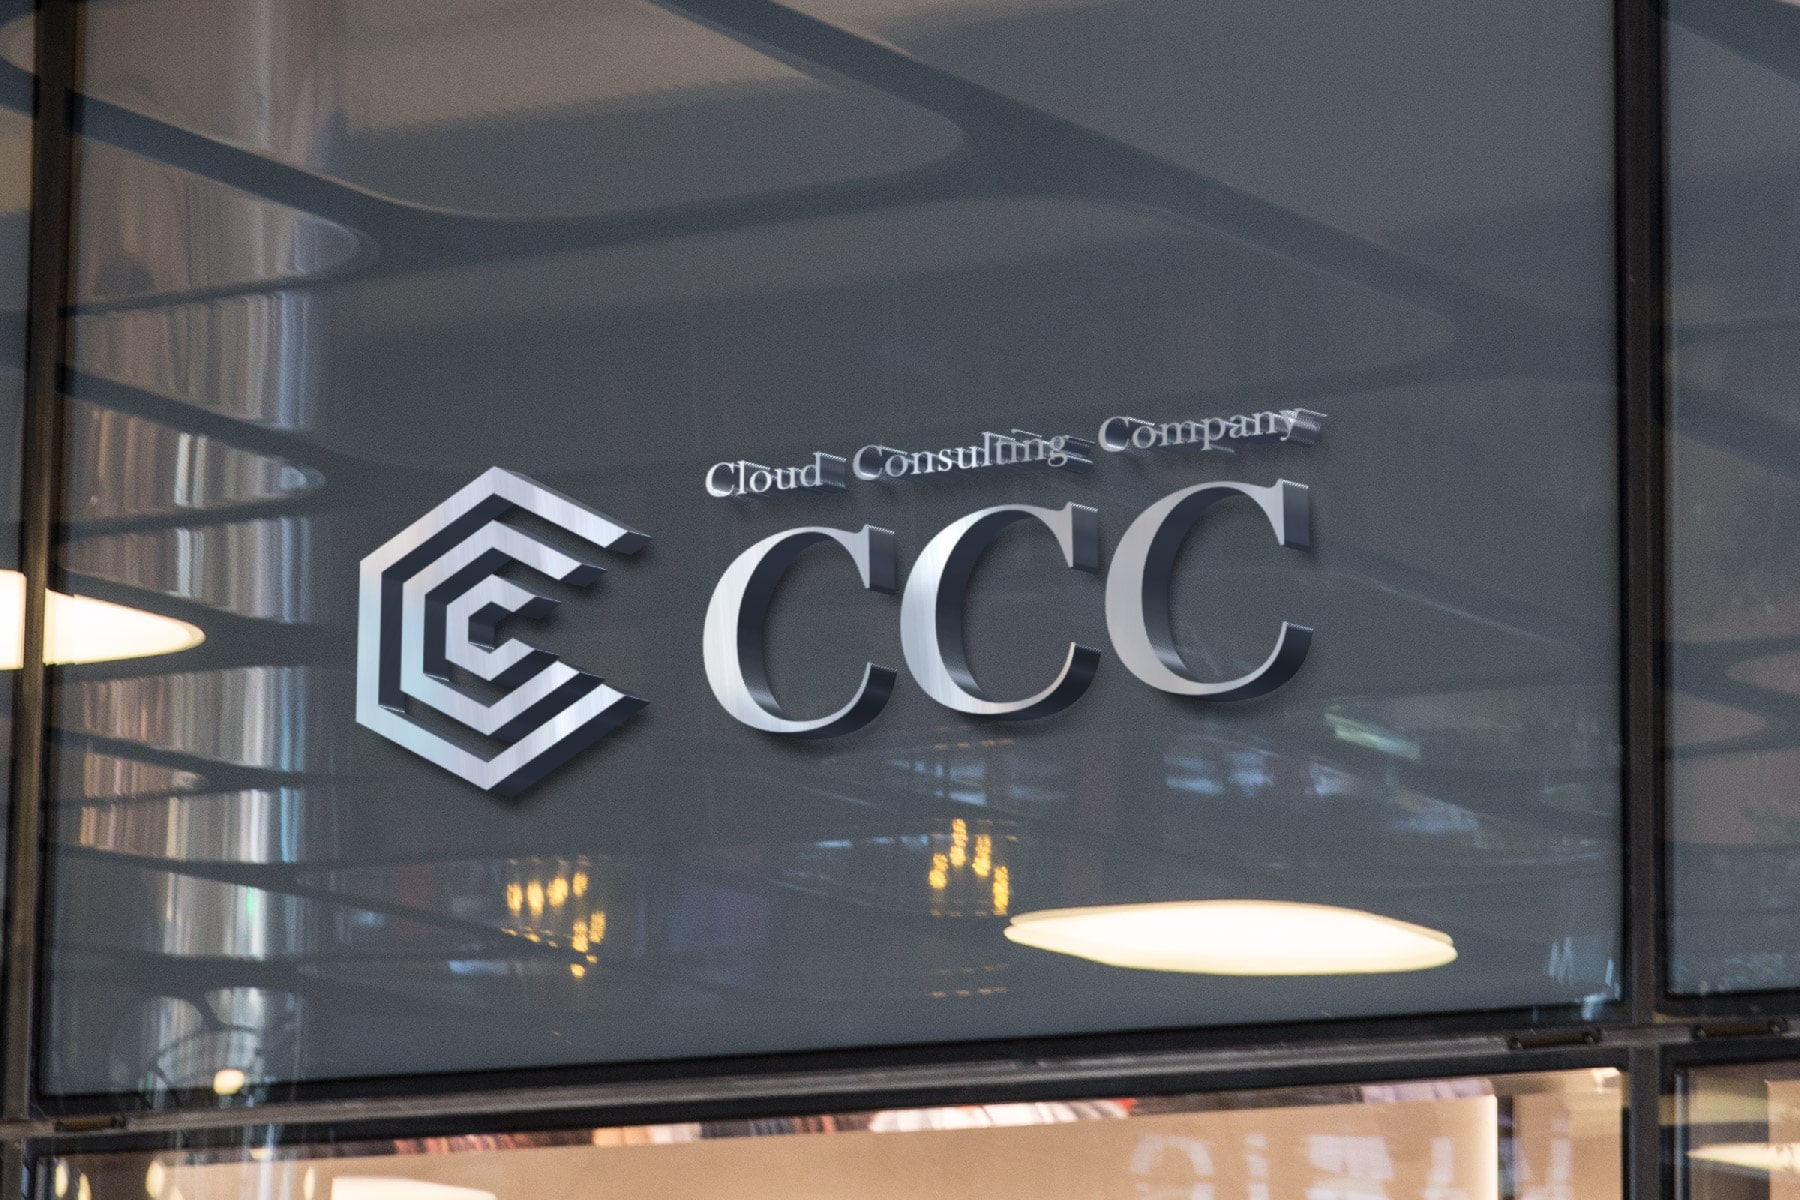 Cloud Consulting Company／名刺